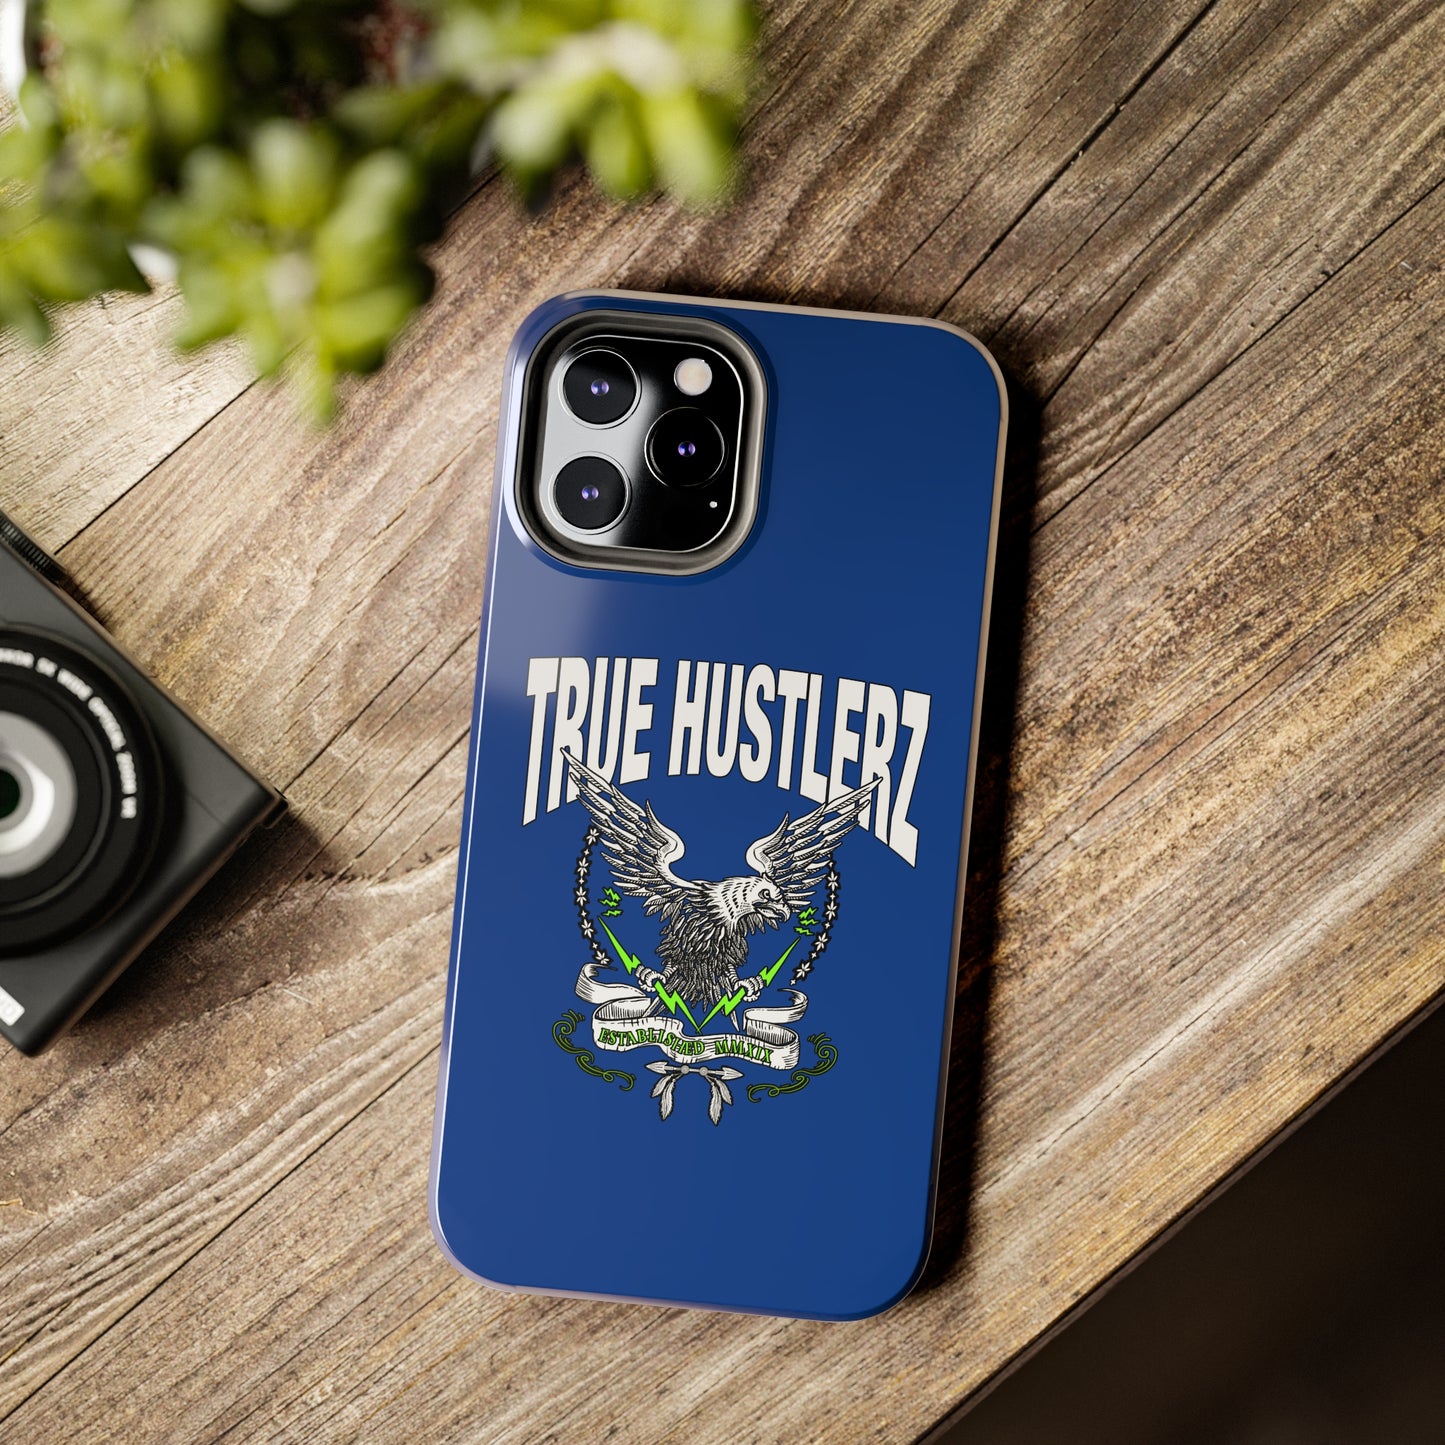 Presidential Hustlerz iPhone Cases